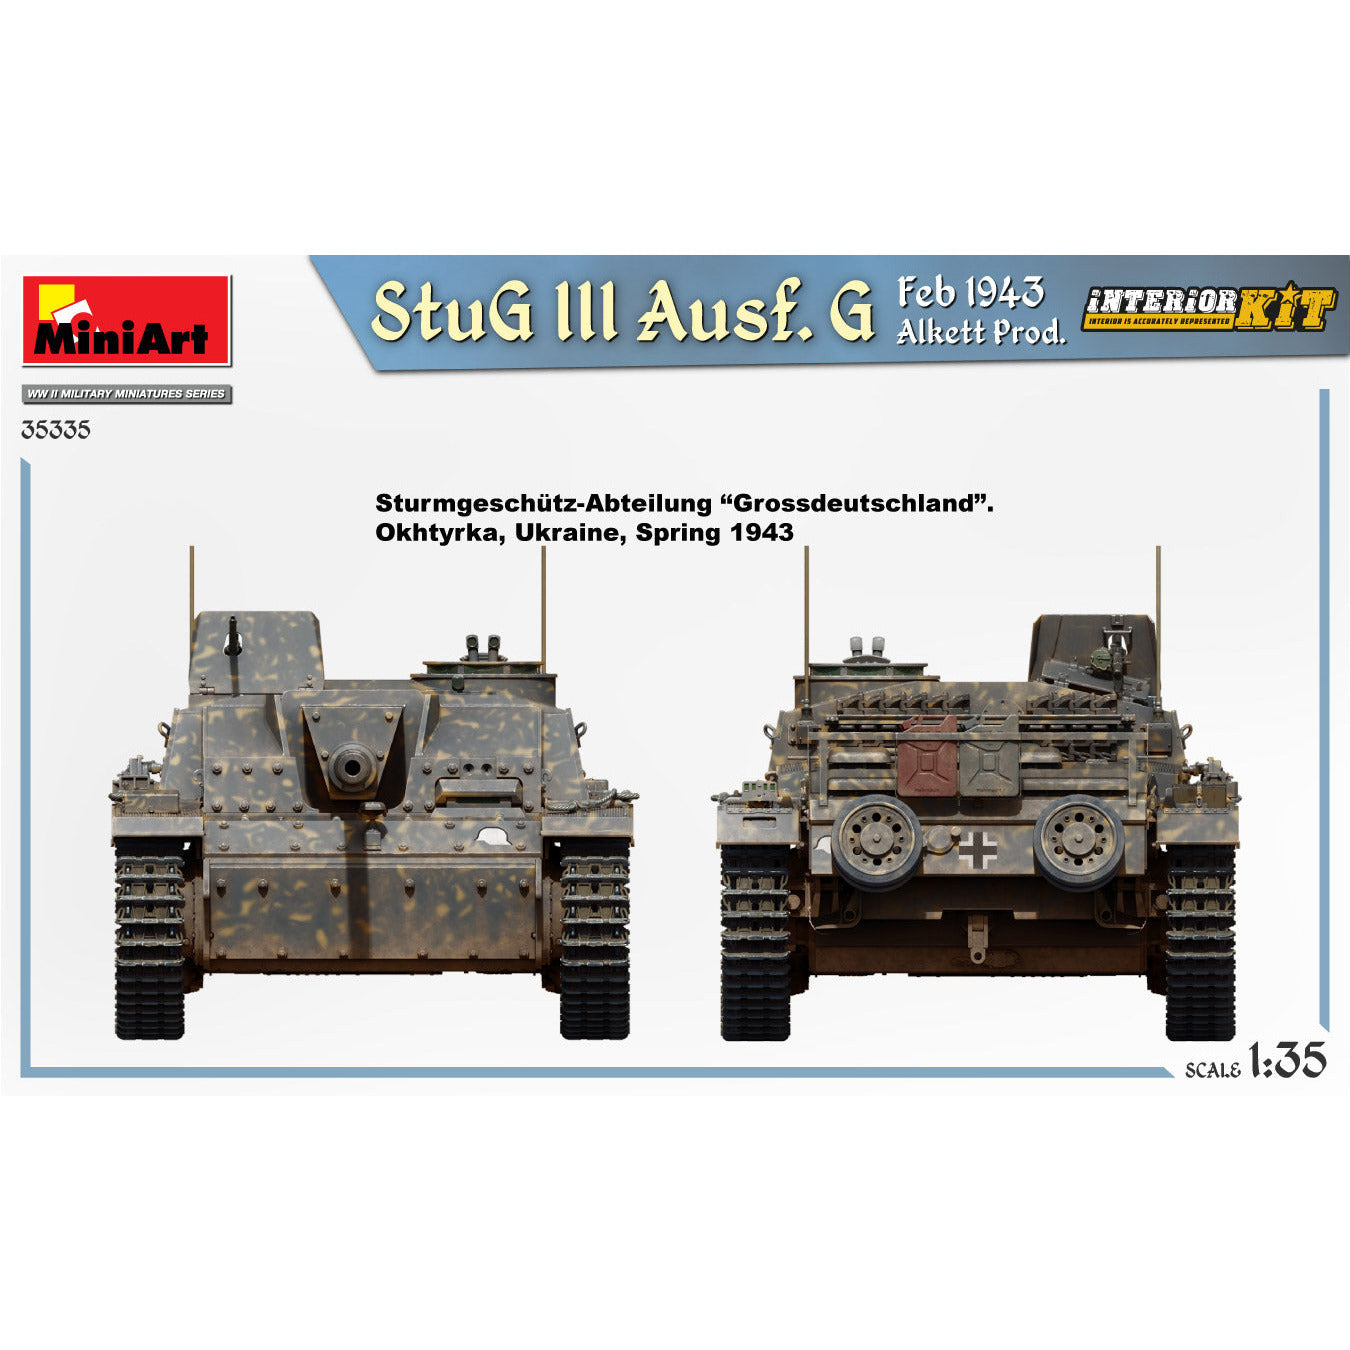 MINIART 1/35 StuG III Ausf. G Feb 1943 Alkett Prod.  Interior Kit